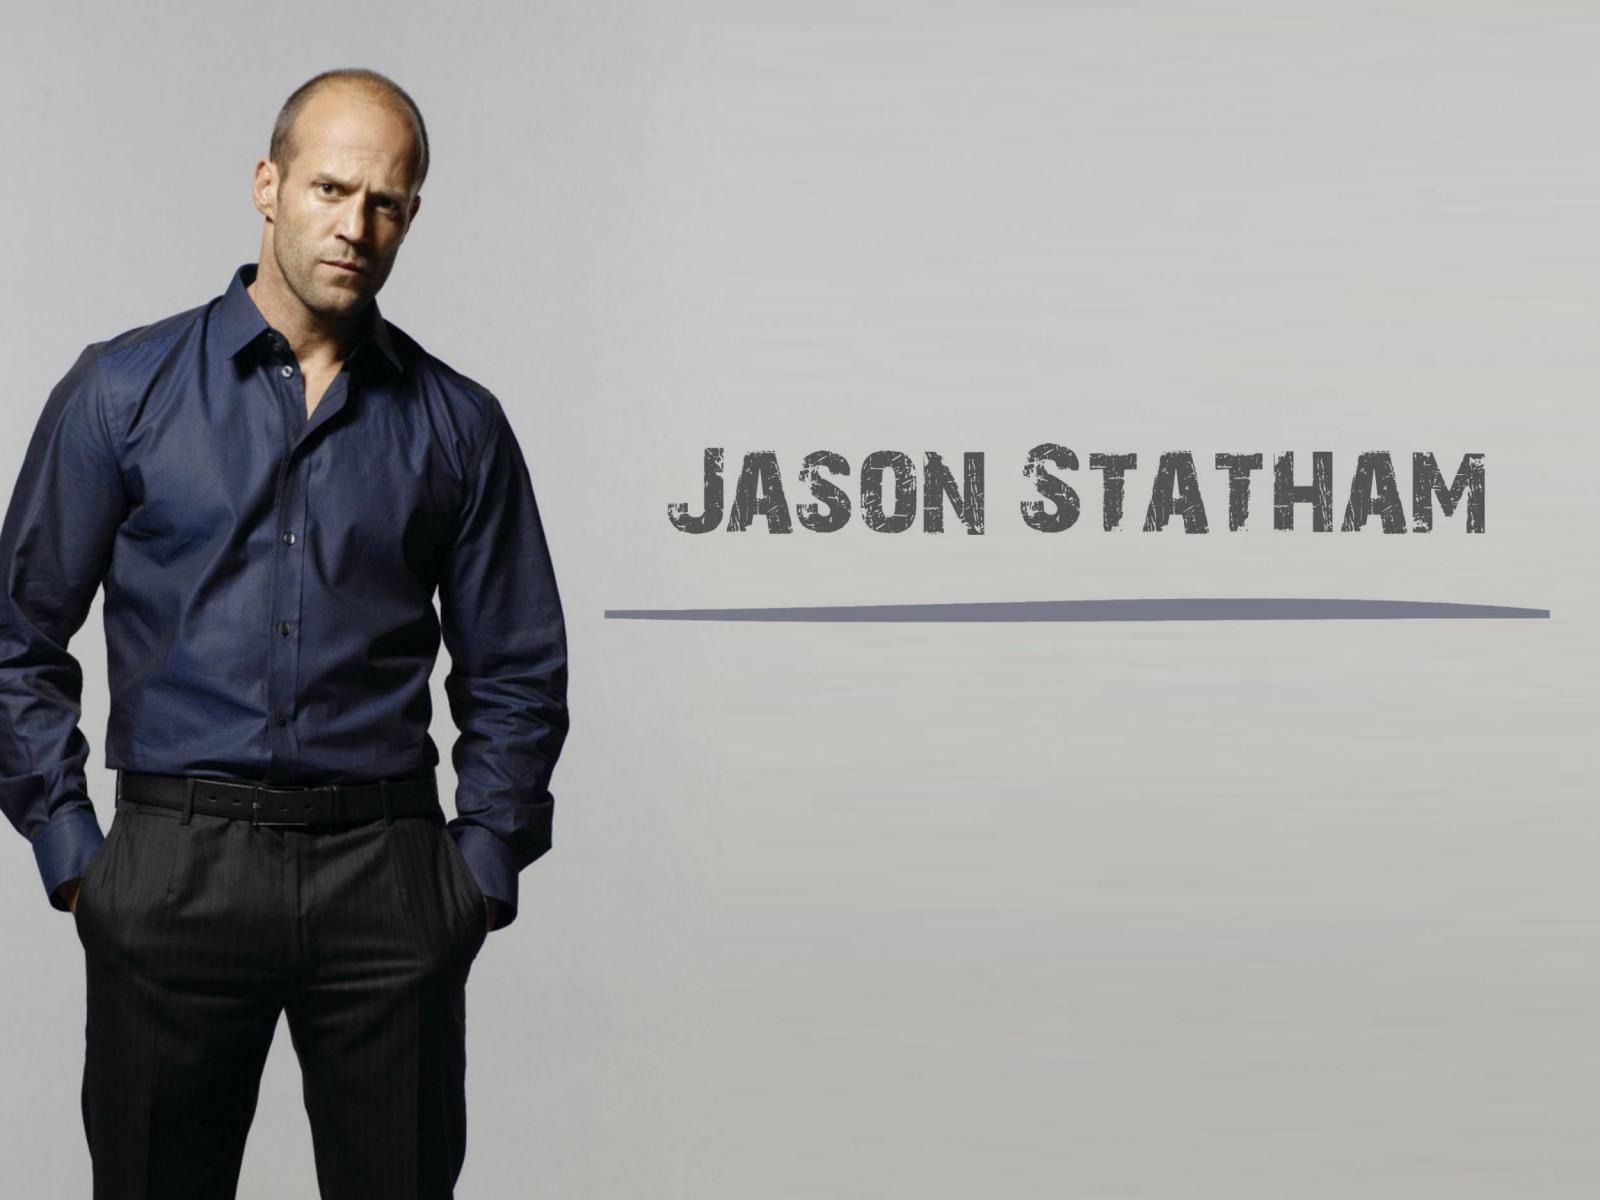 Jason Statham Poster for 1600 x 1200 resolution